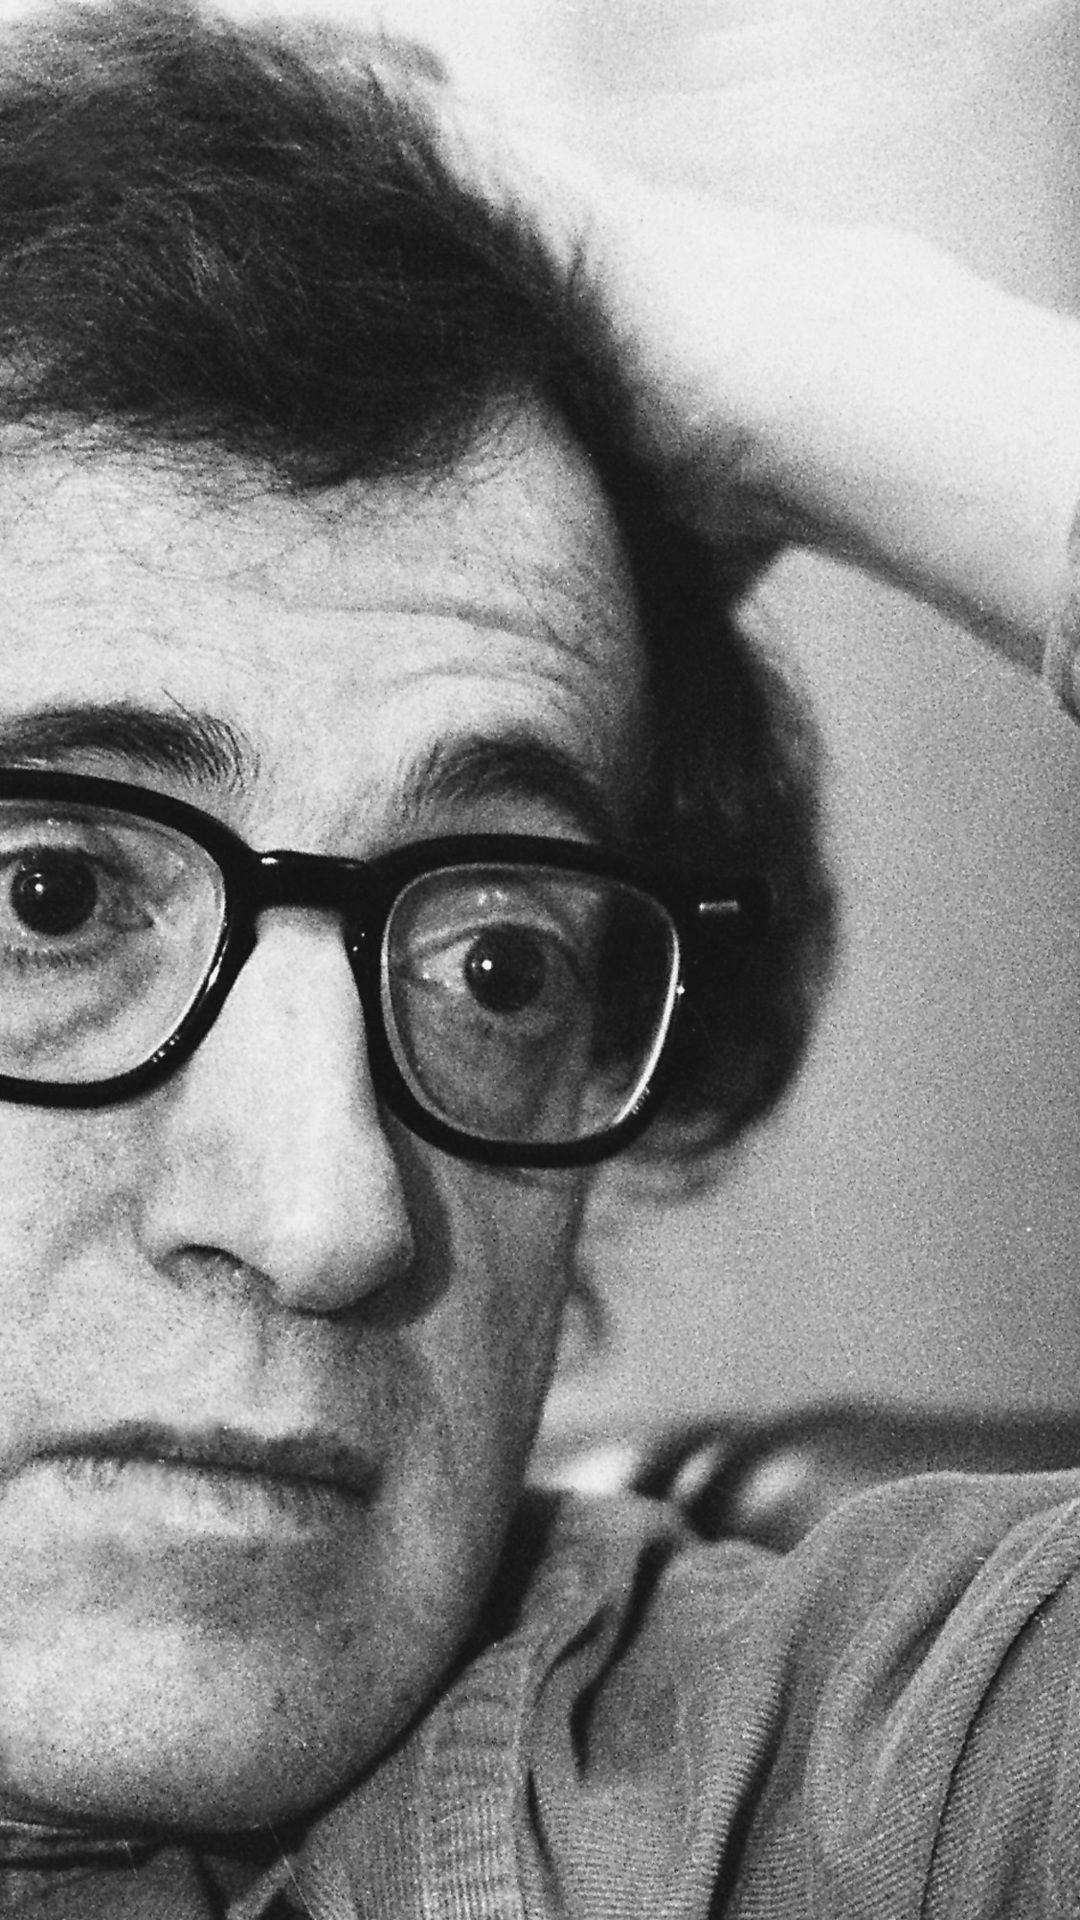 Cercanoextremo Del Cineasta Estadounidense Woody Allen. Toma En Escala De Grises. Fondo de pantalla